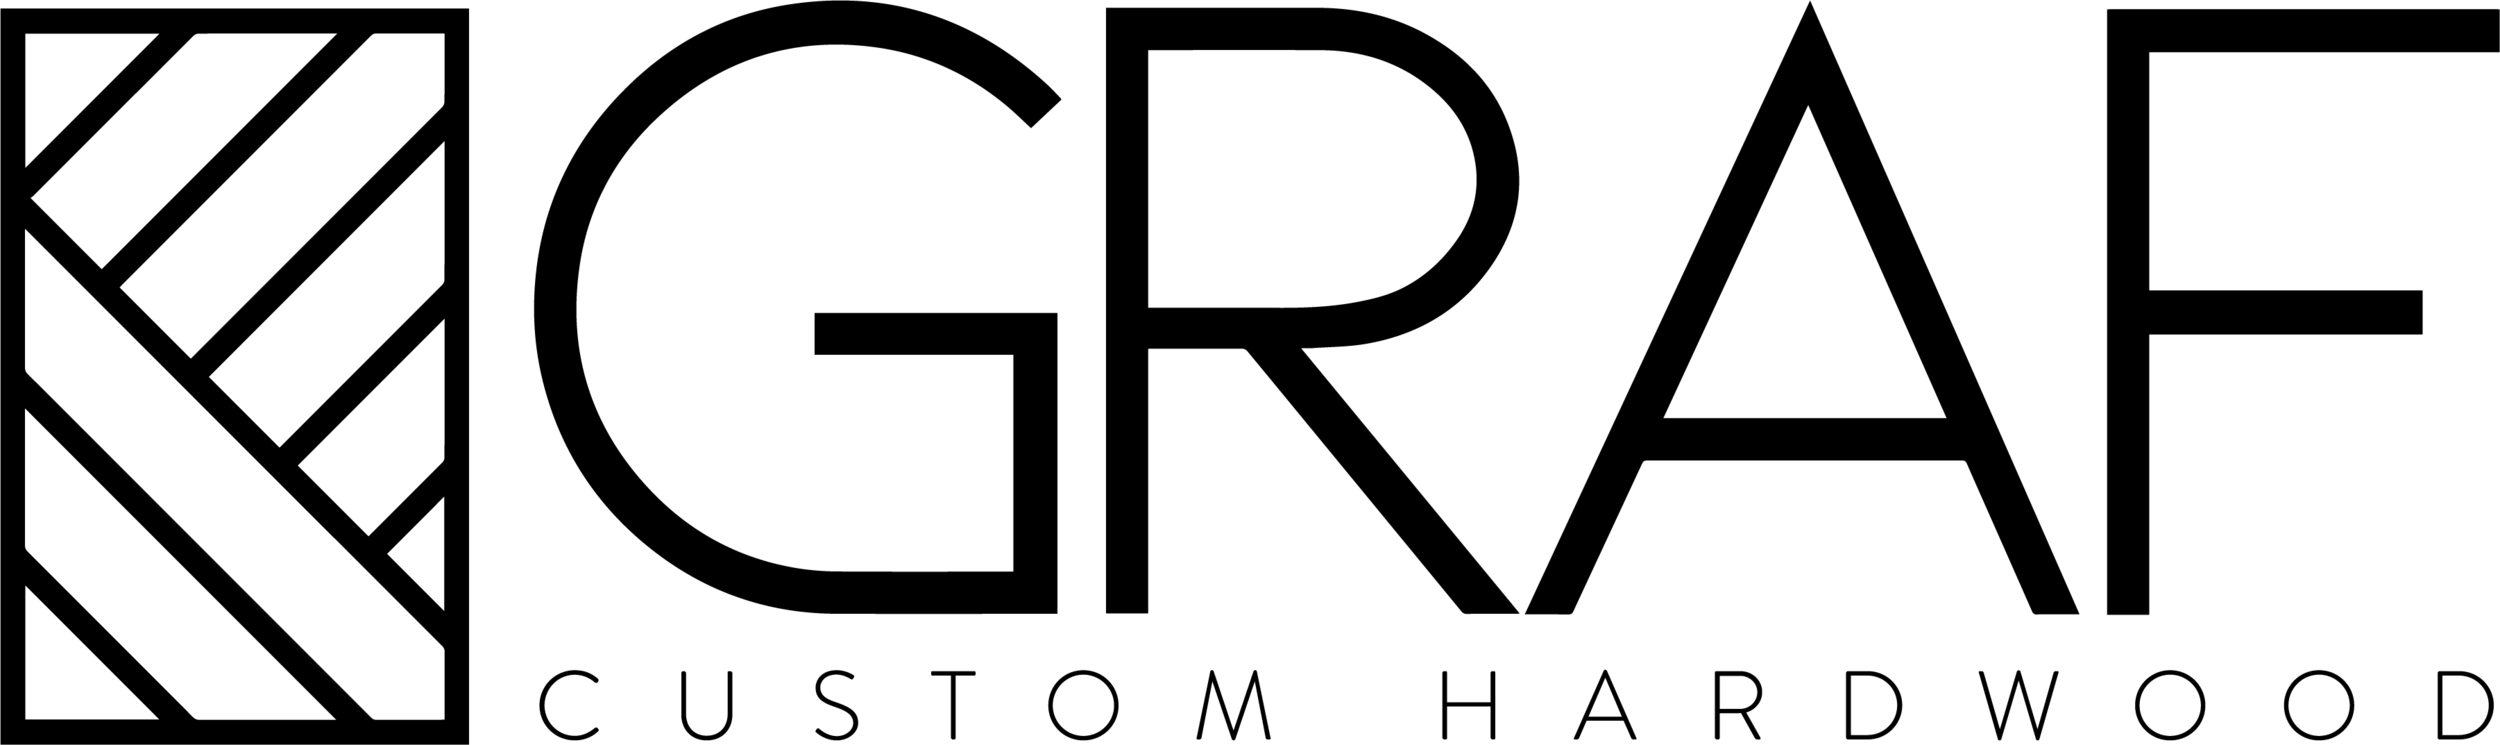 GFCH-Final-Logo_Black.png